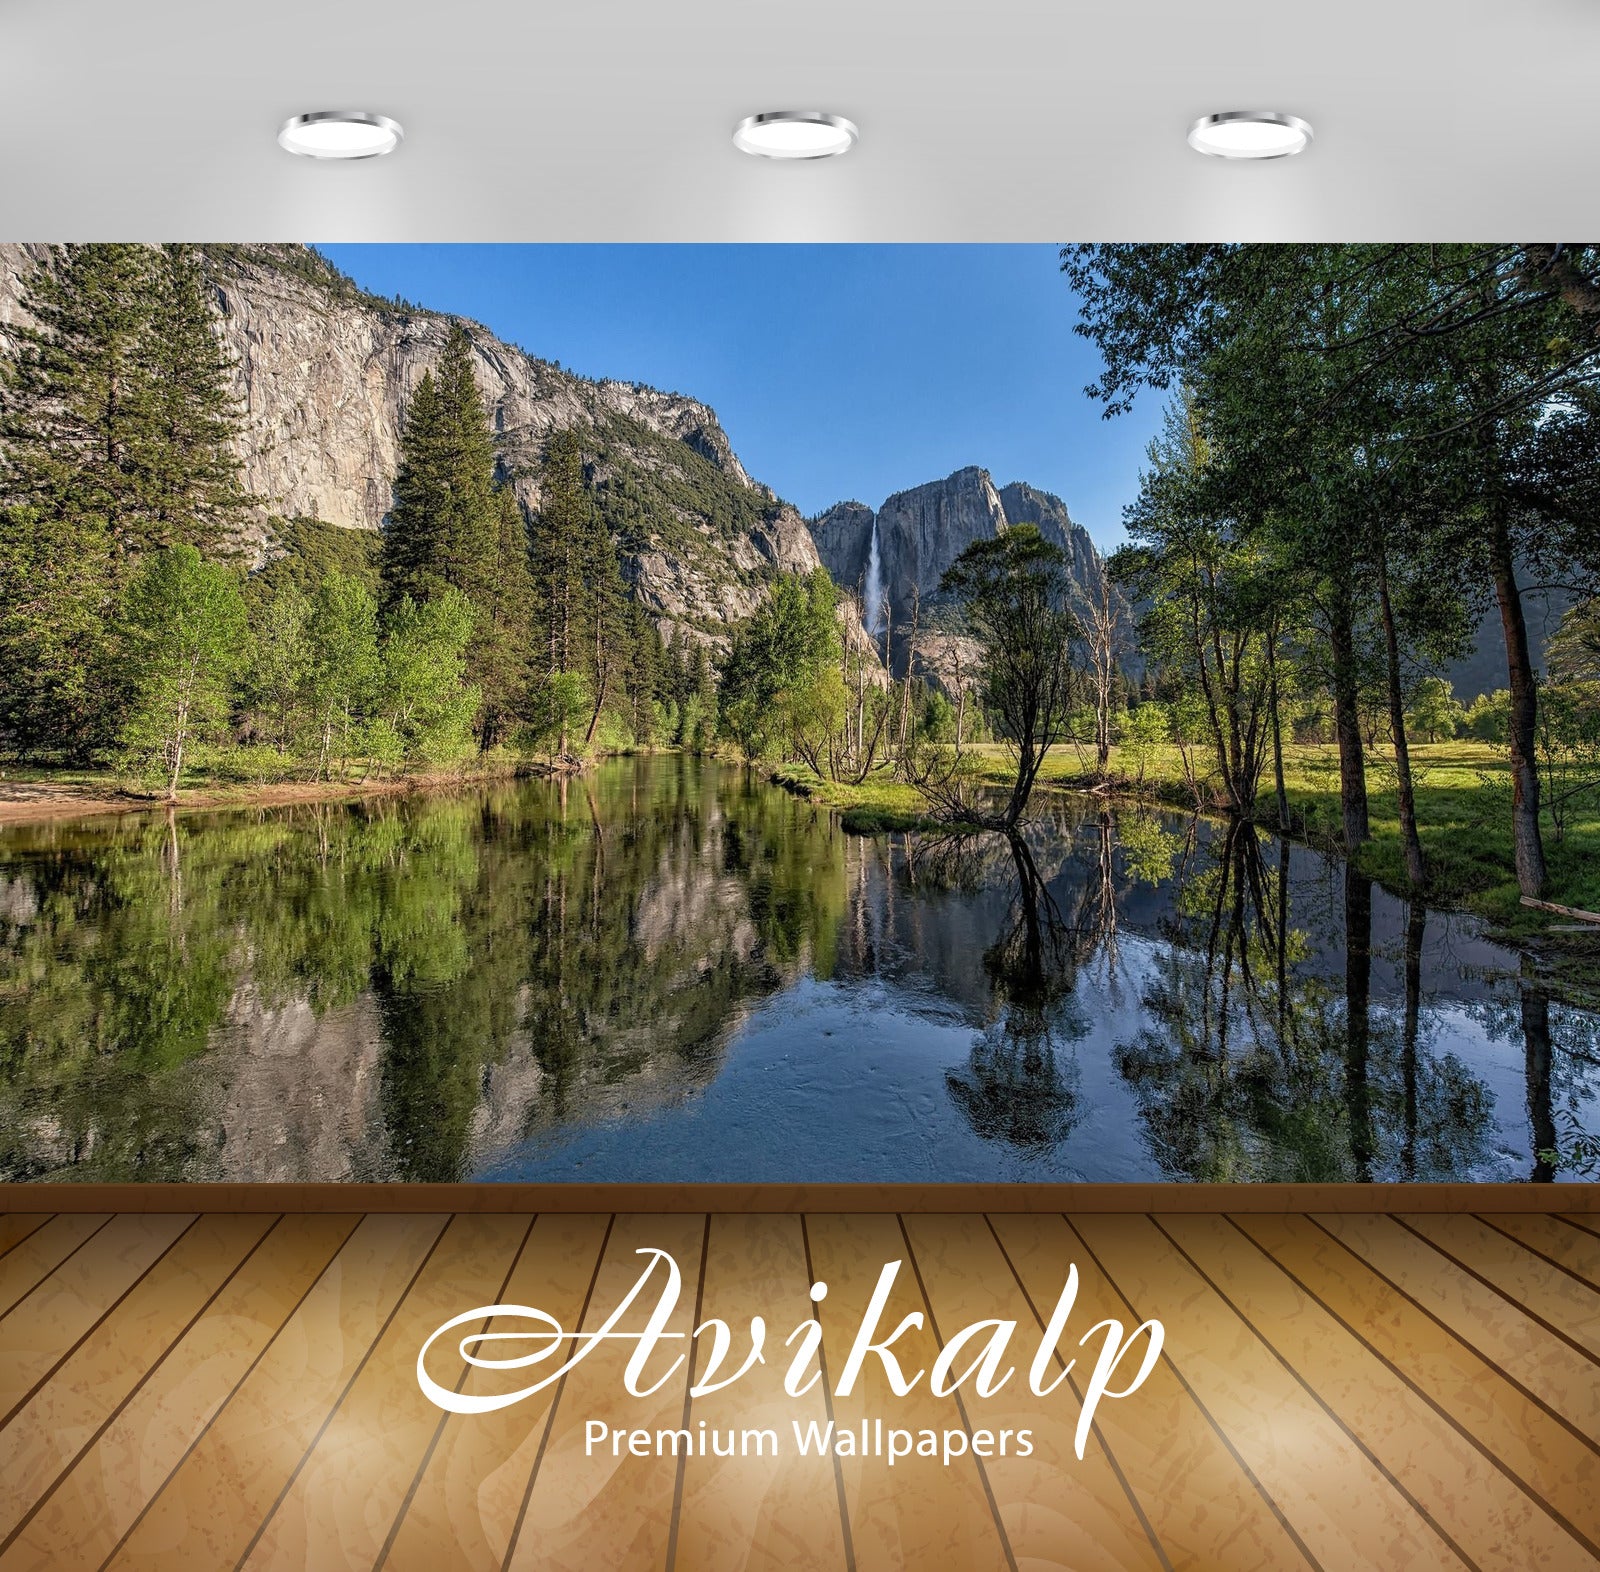 Avikalp Exclusive Awi6767 Yosemite National Park Nature Full HD Wallpapers for Living room, Hall, Ki